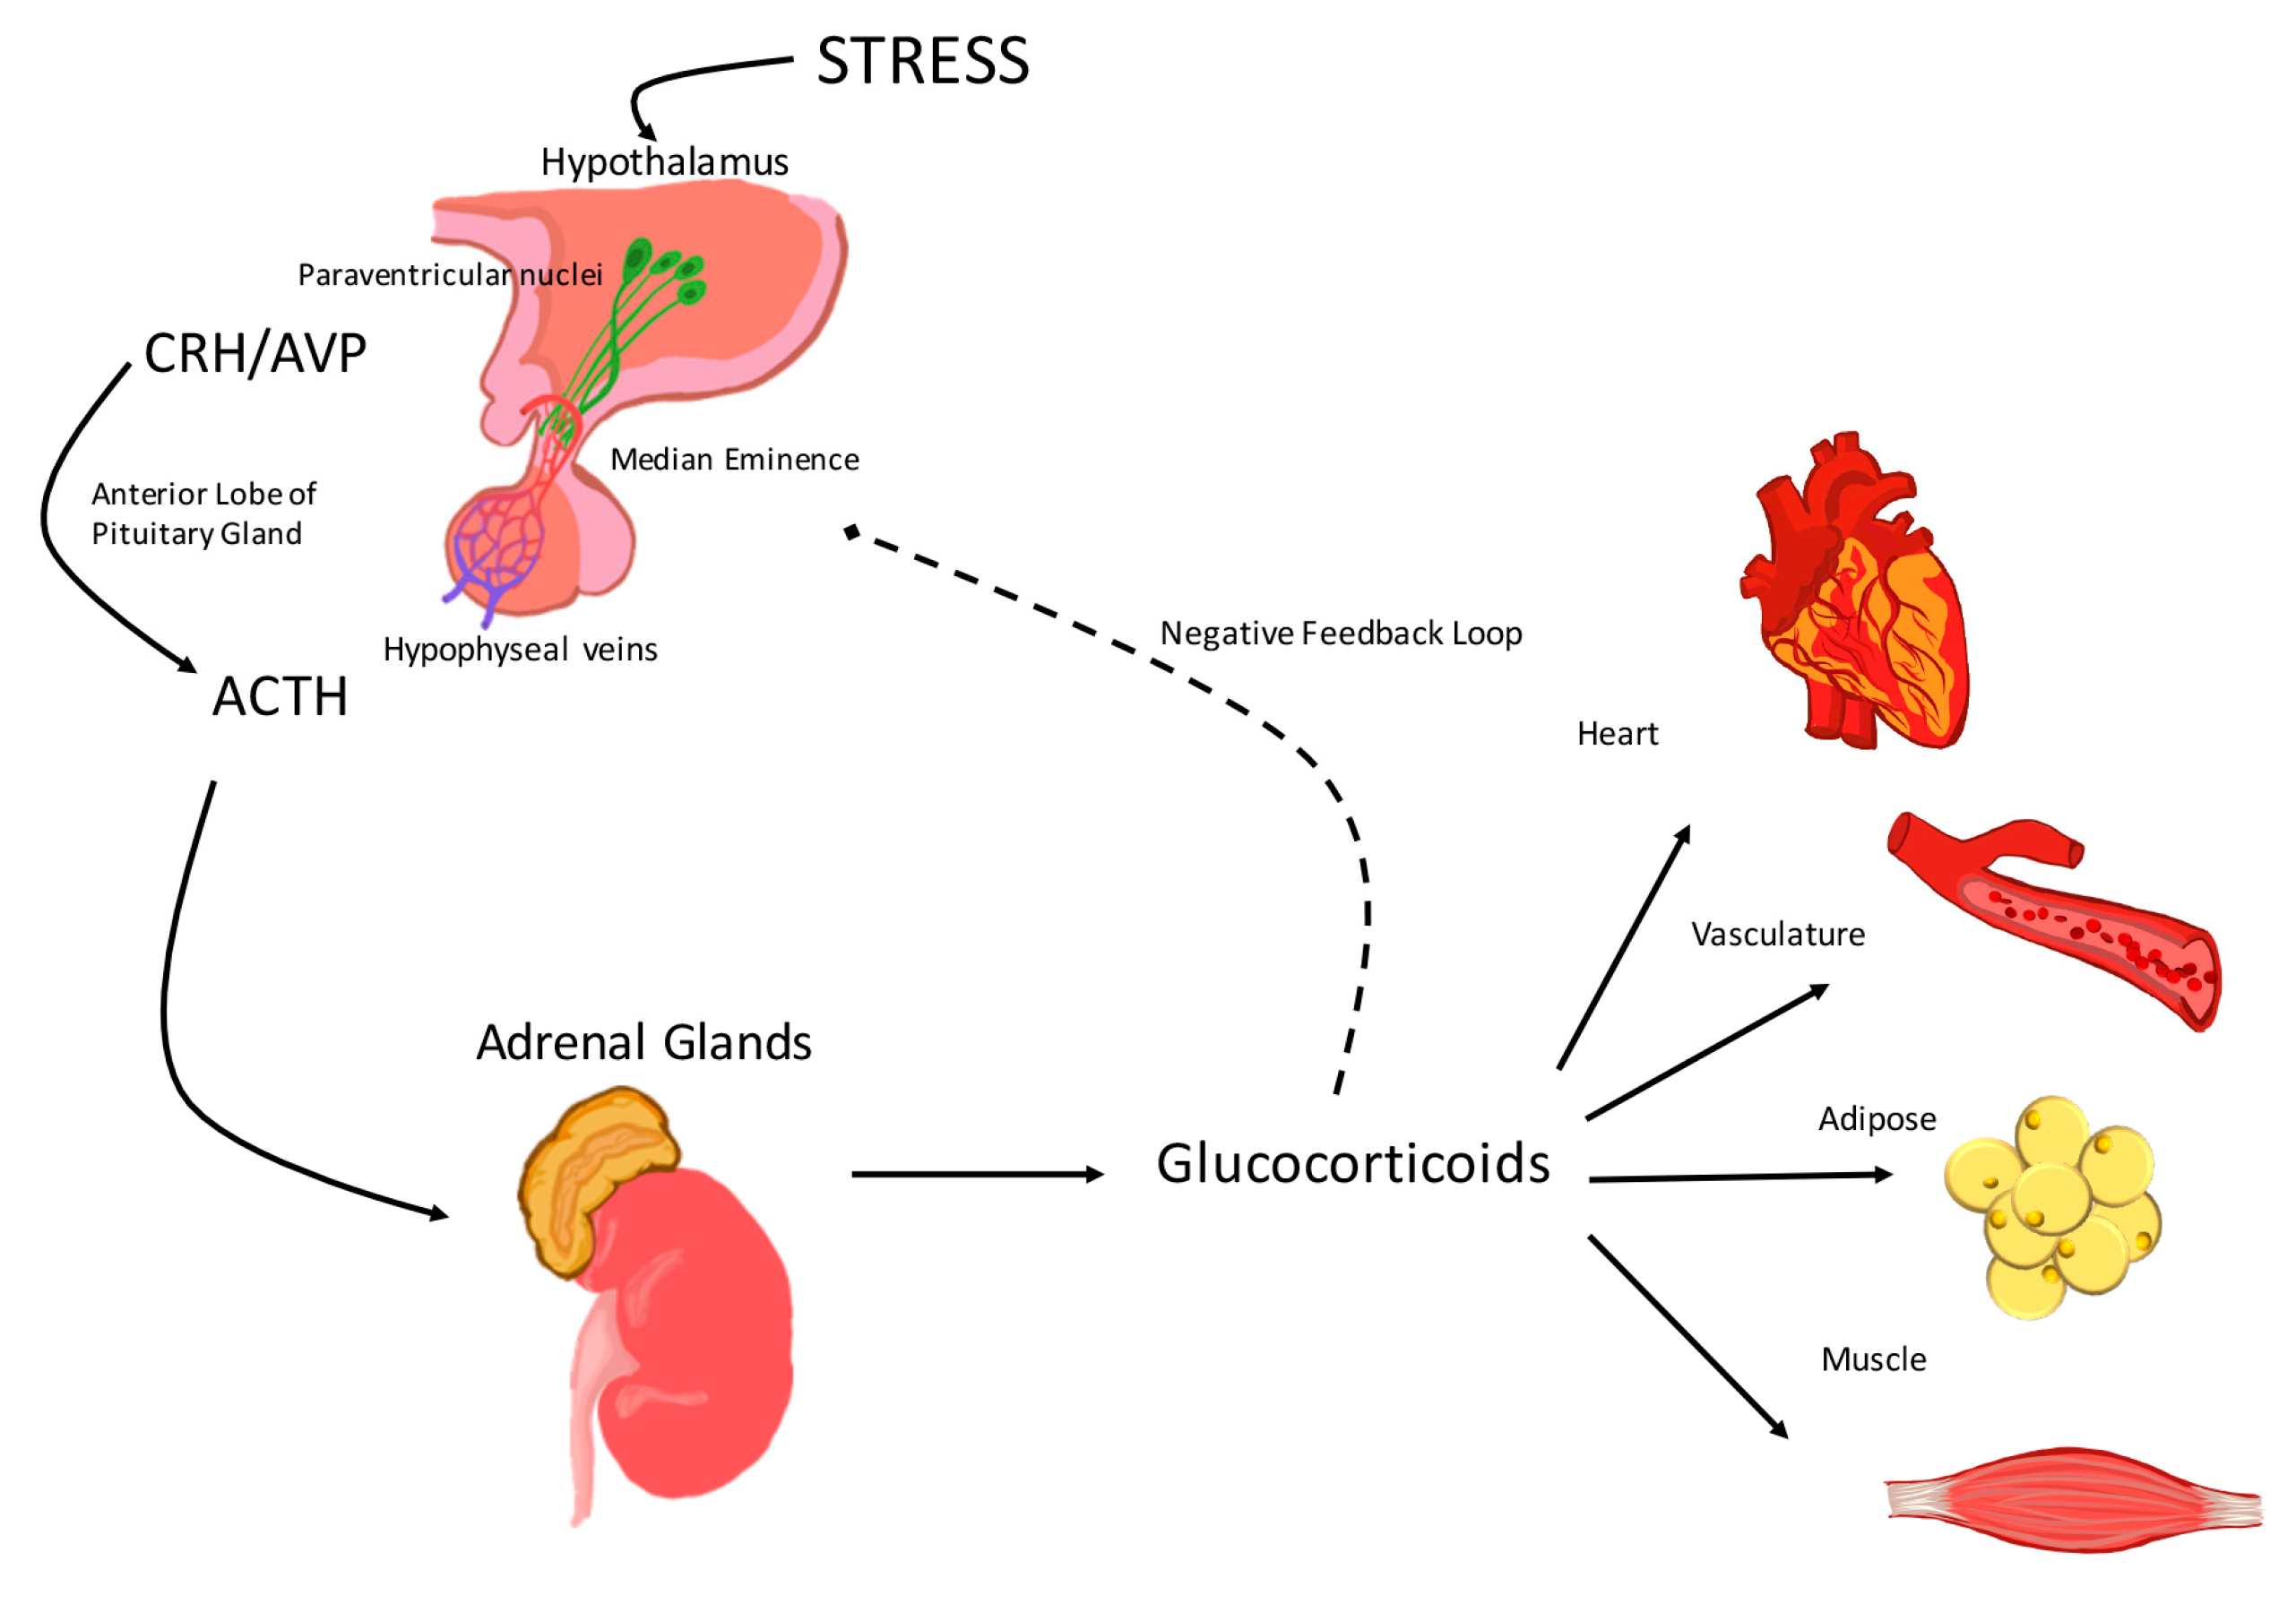 hormones for adrenal gland